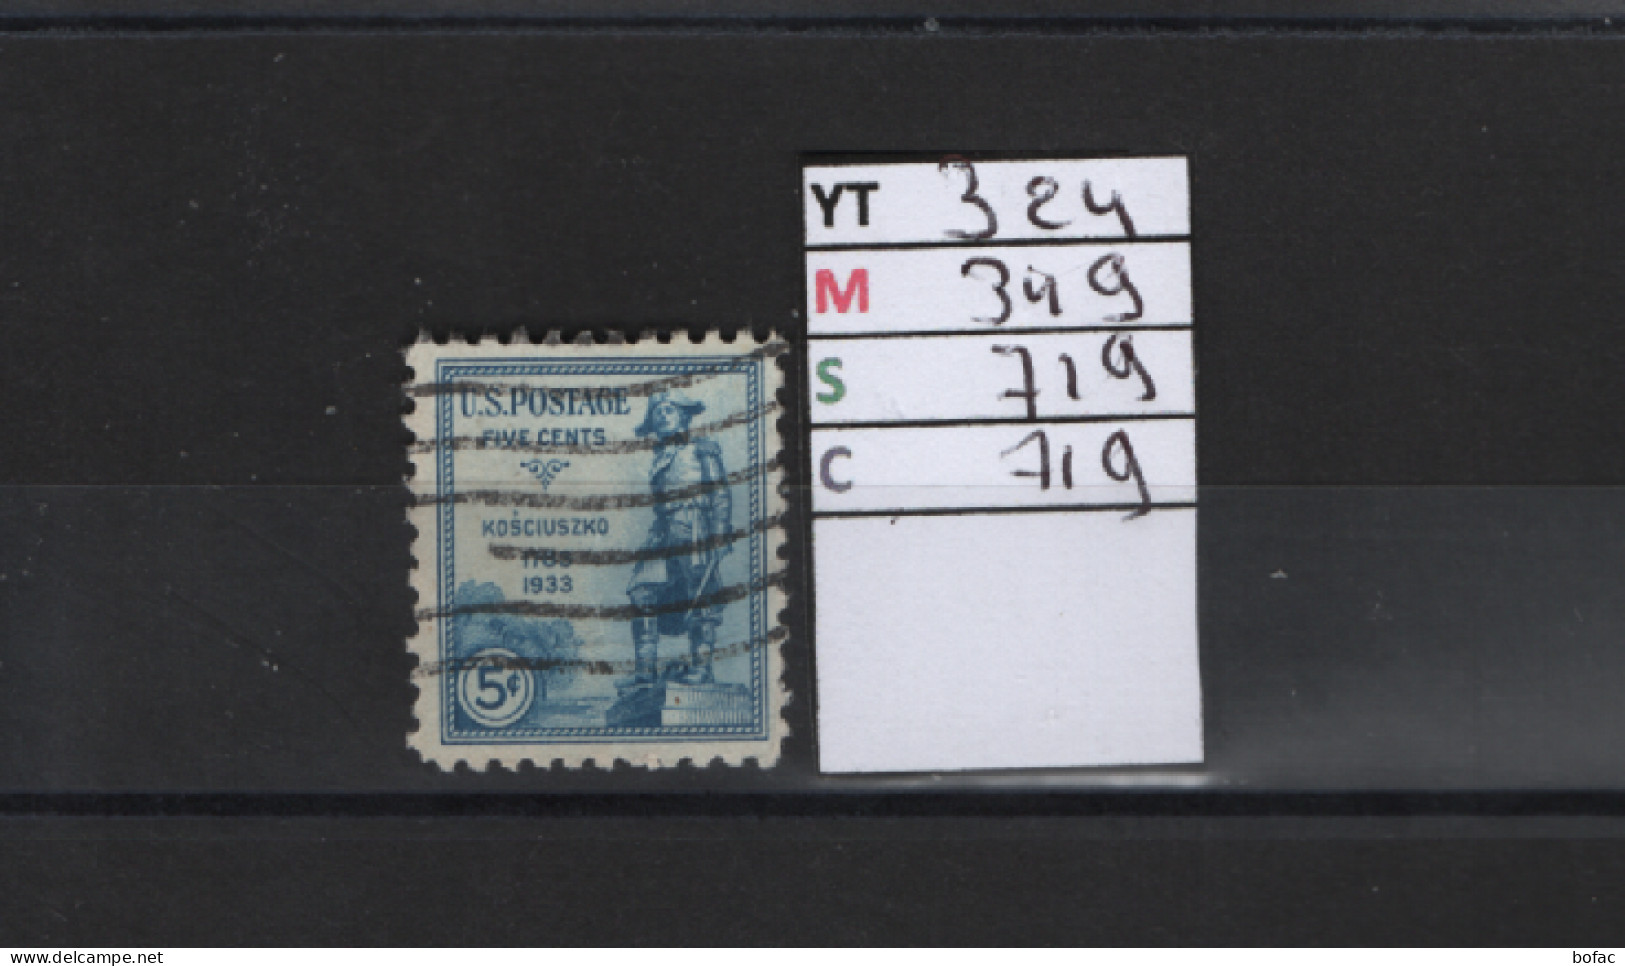 PRIX FIXE Obl 324 YT 349 MIC 719 SCOT 719 GIB Général " Tadeusz 1933 Etats Unis 58A/01 - Used Stamps